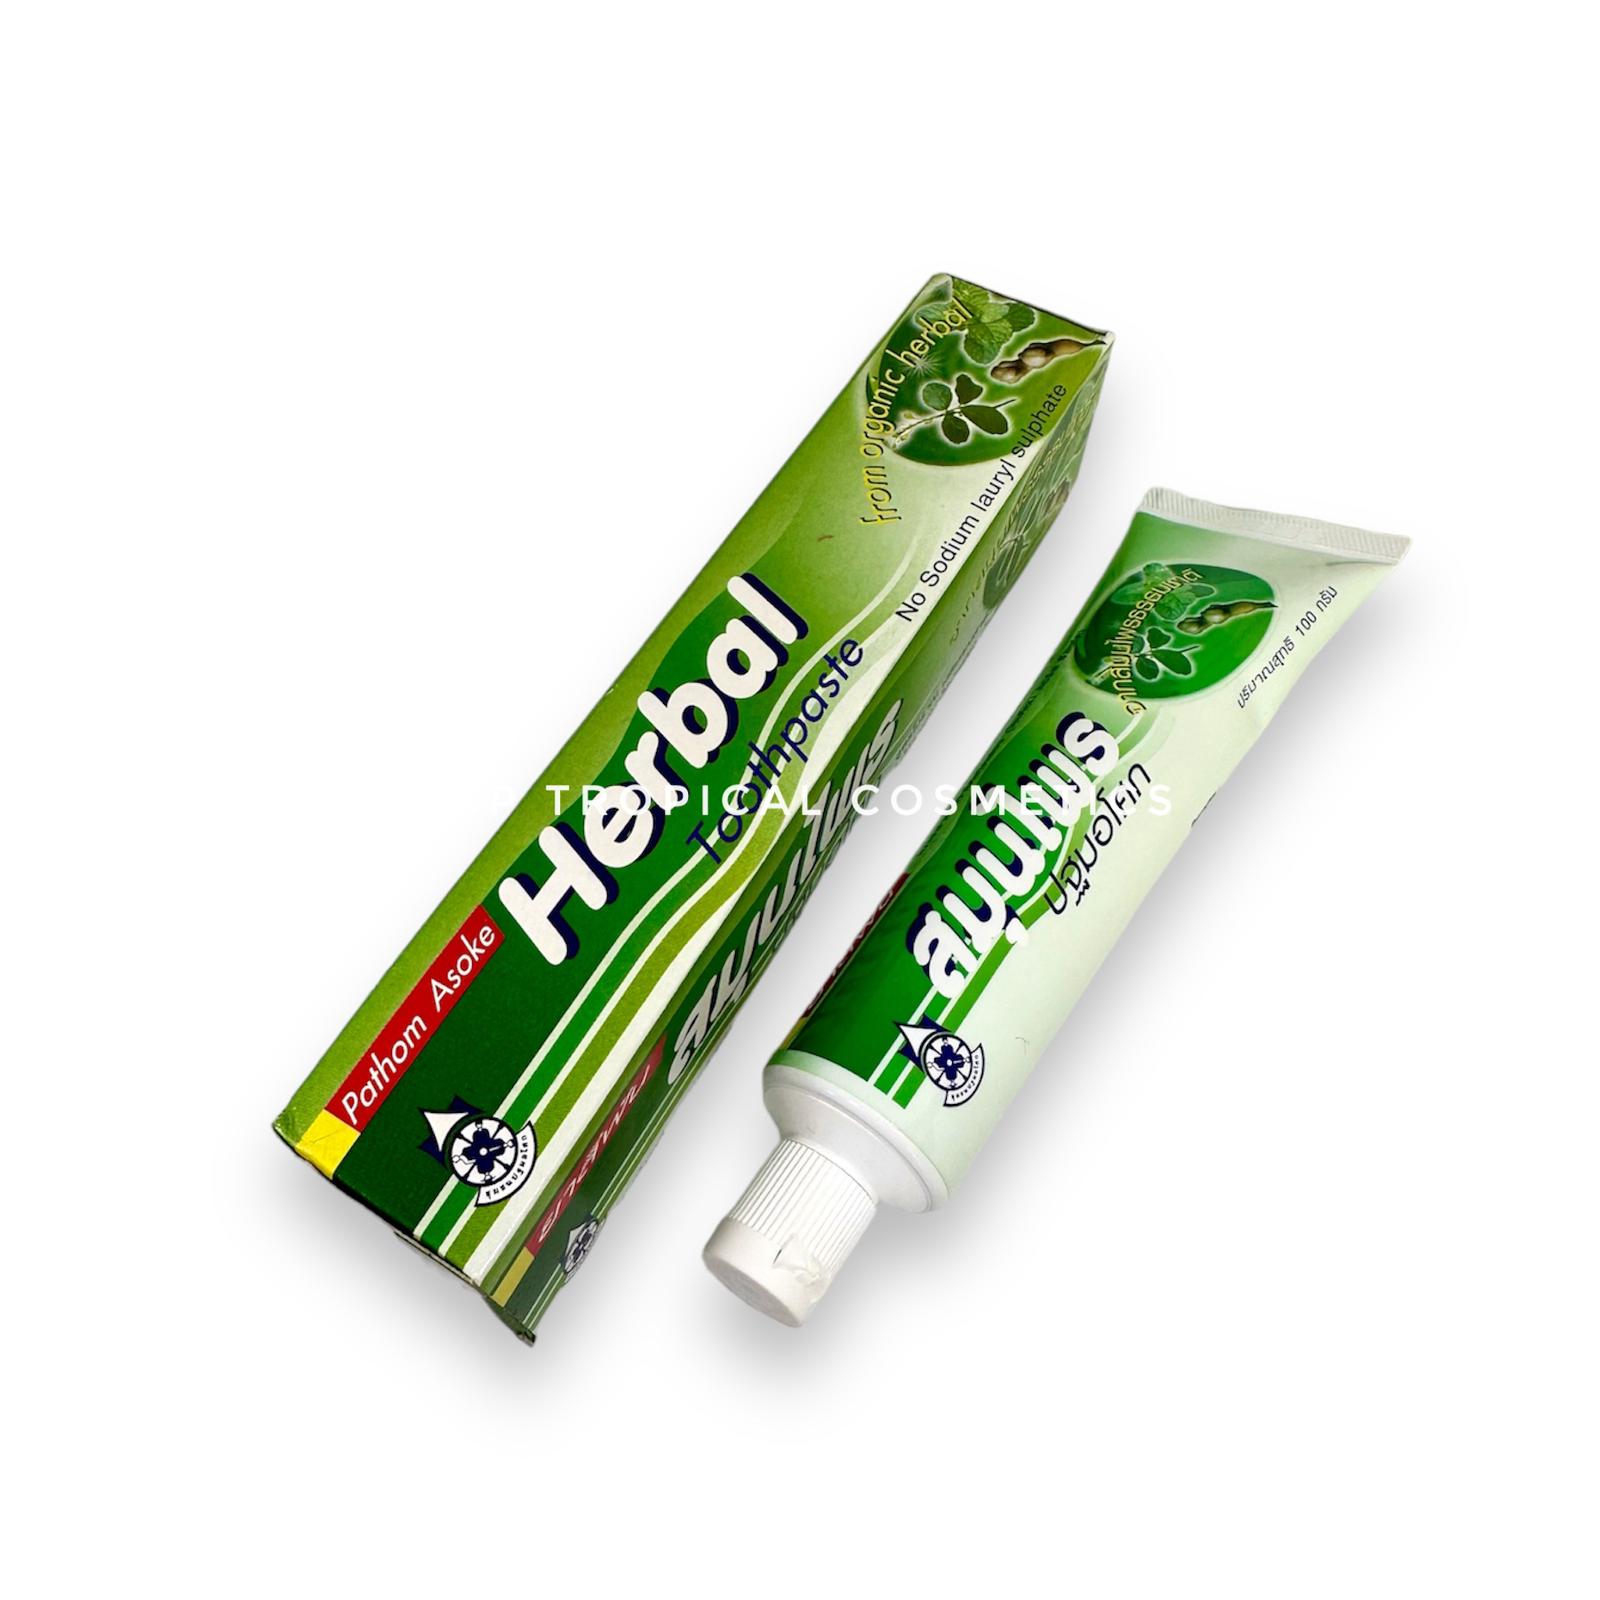 Choom Chon Pra-thom A-soke Herbal Toothpaste Natural Organic (Peppermint and Clove) 100 g., Травяная зубная паста с мятой и гвоздикой 100 гр.